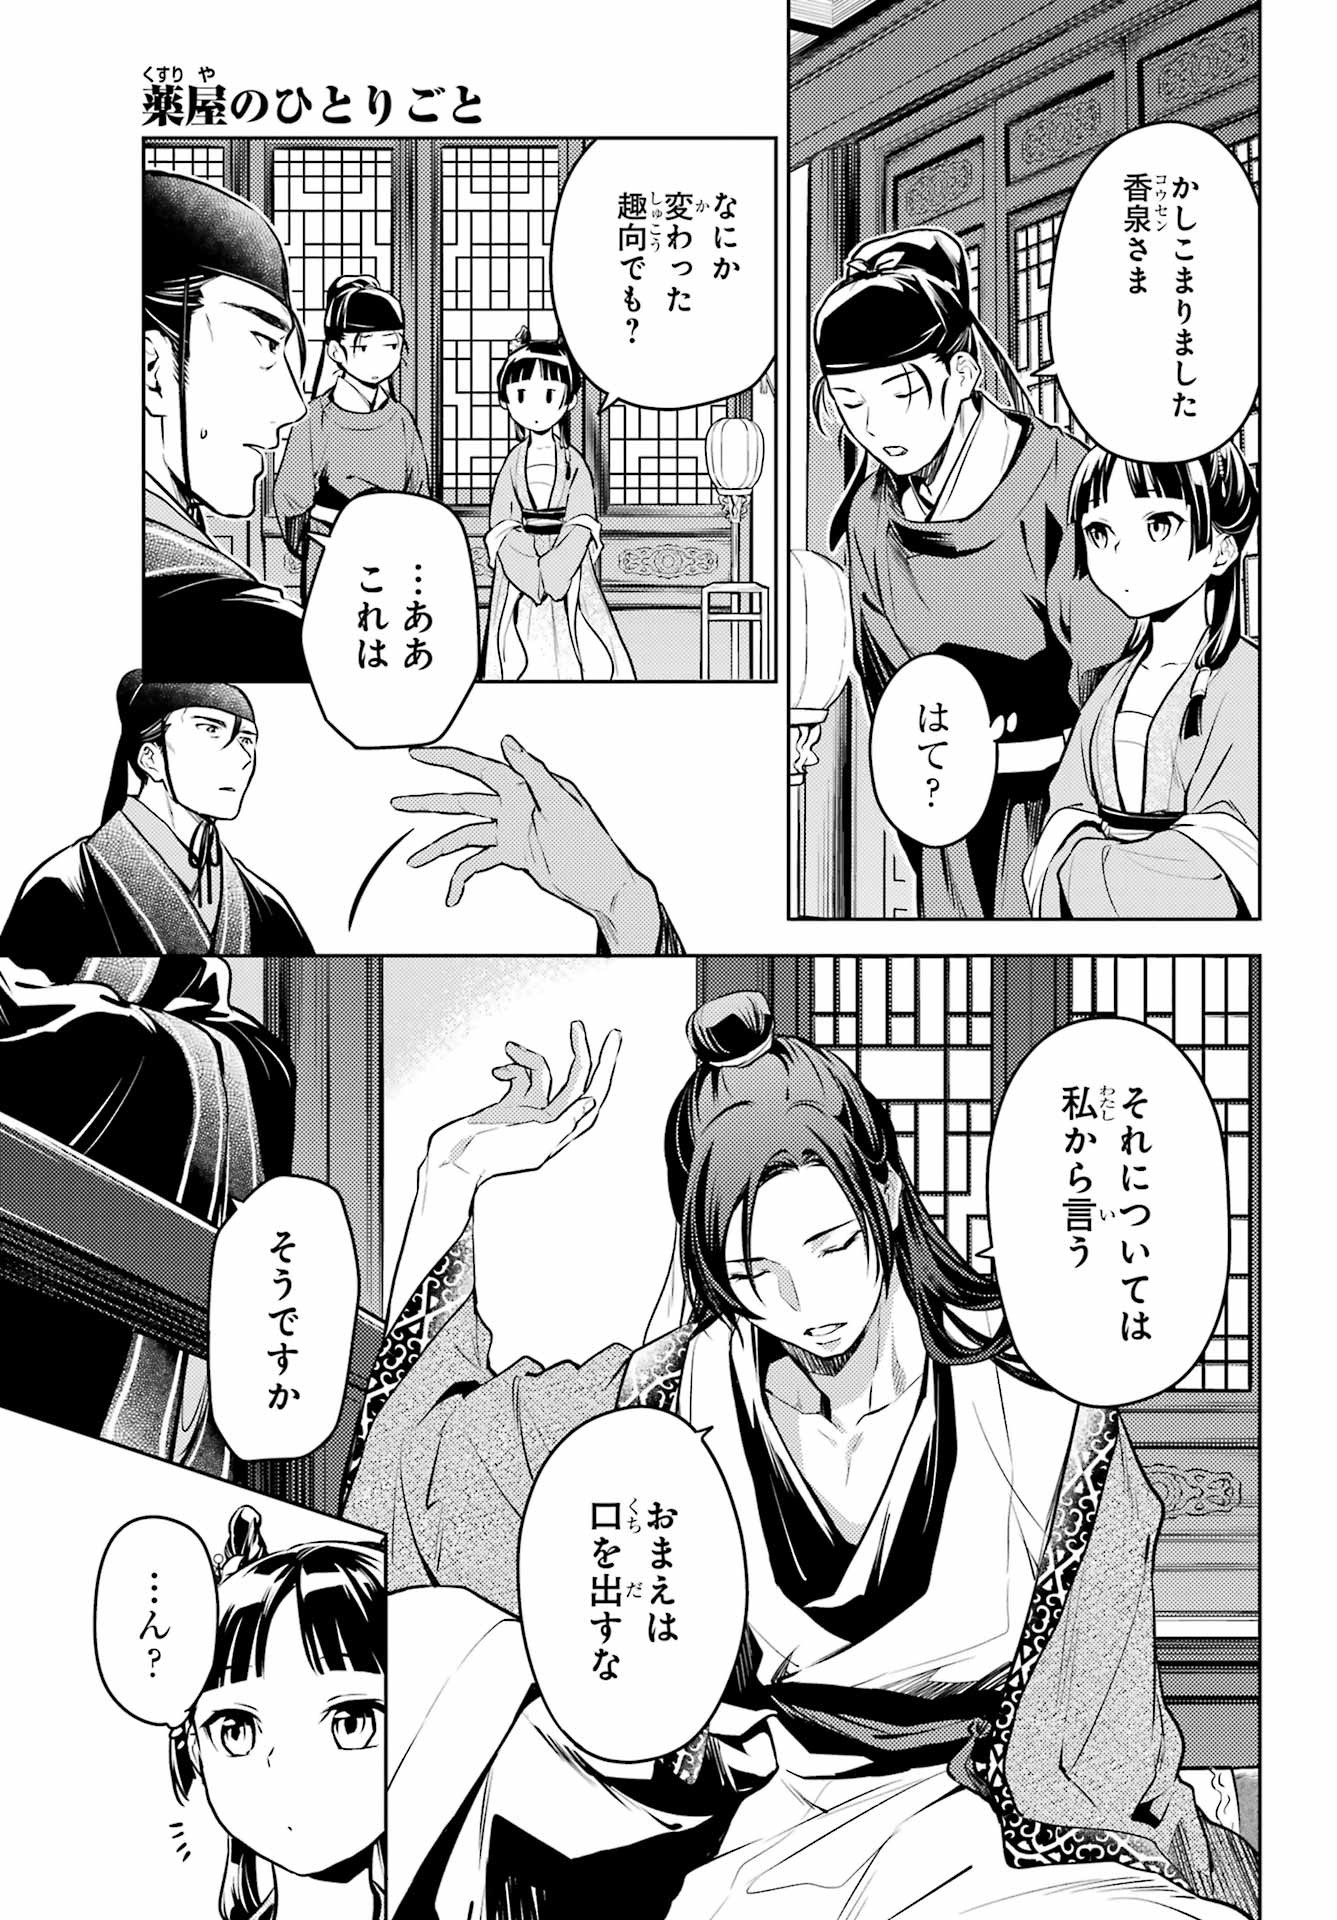 Kusuriya no Hitorigoto - Chapter 60-1 - Page 21